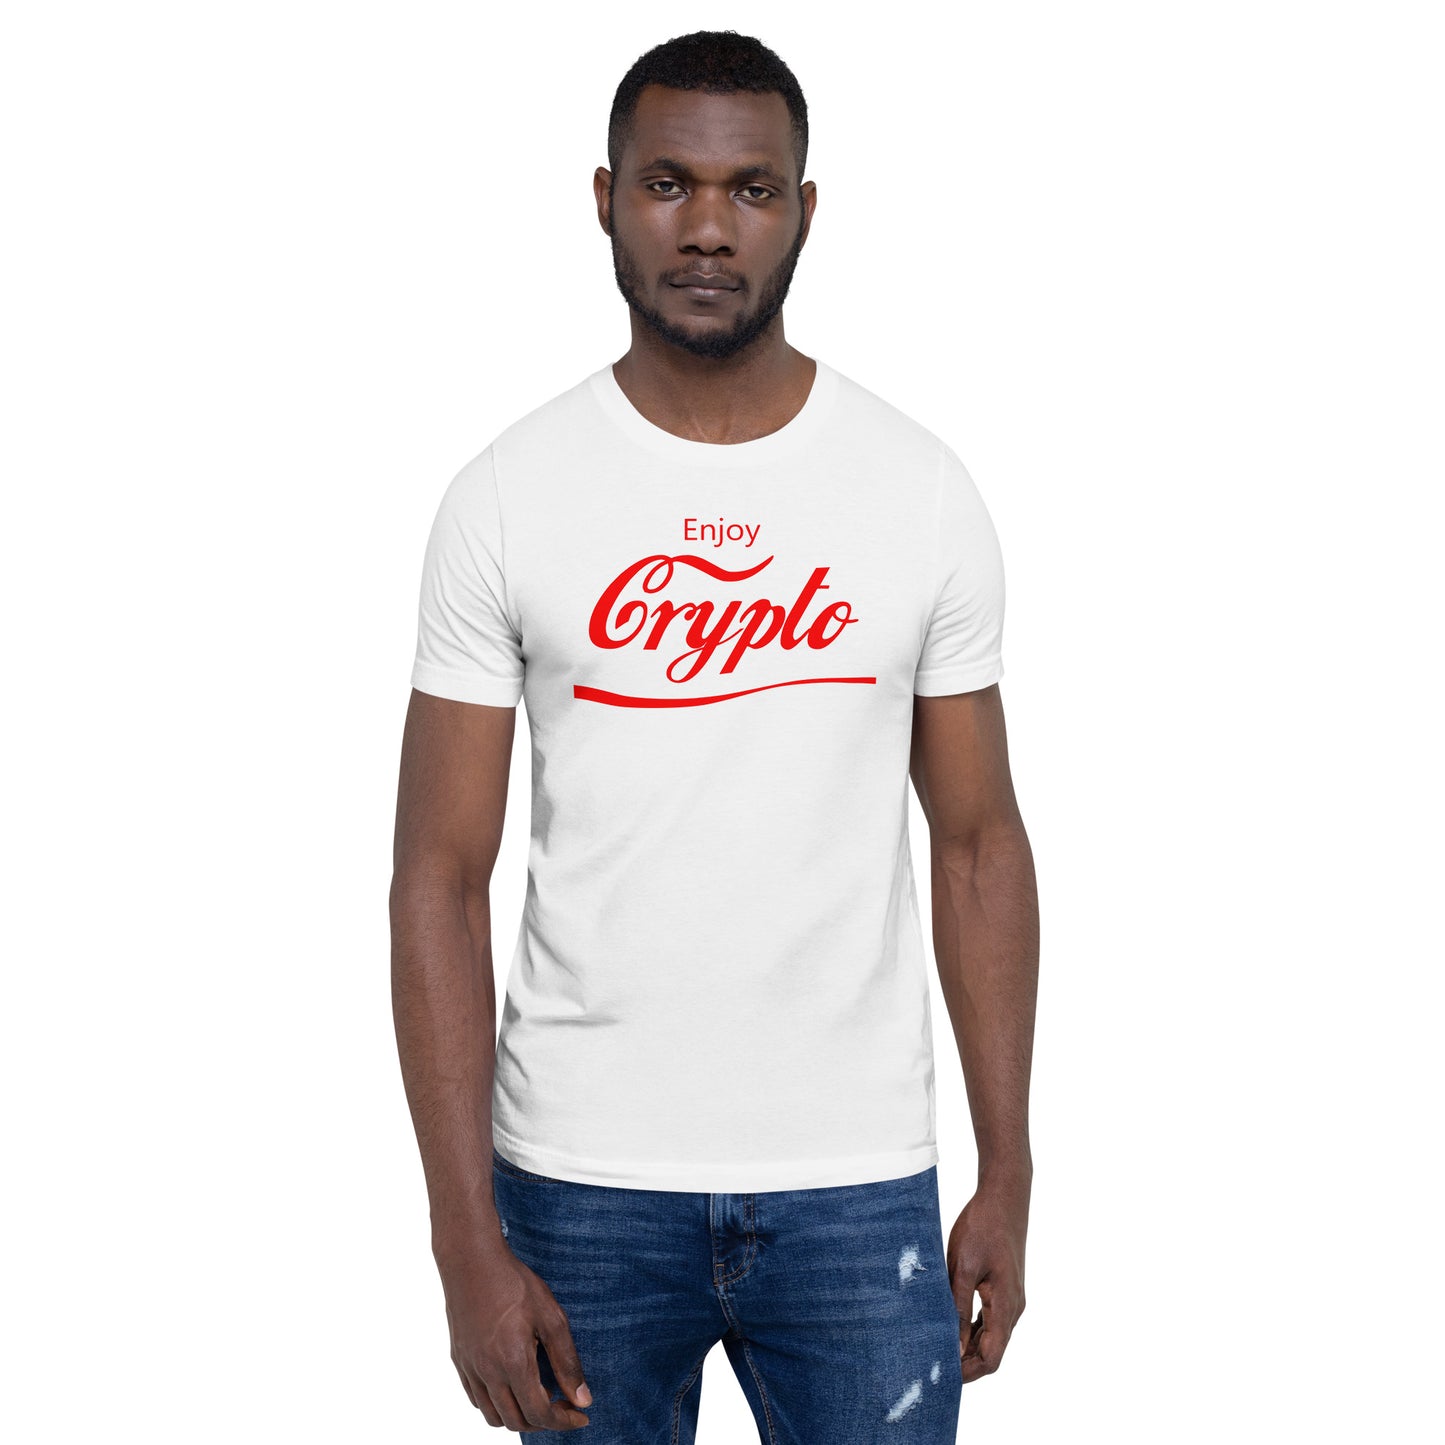 Enjoy Crypto | Shirts & Tops | enjoy-crypto-tee | printful